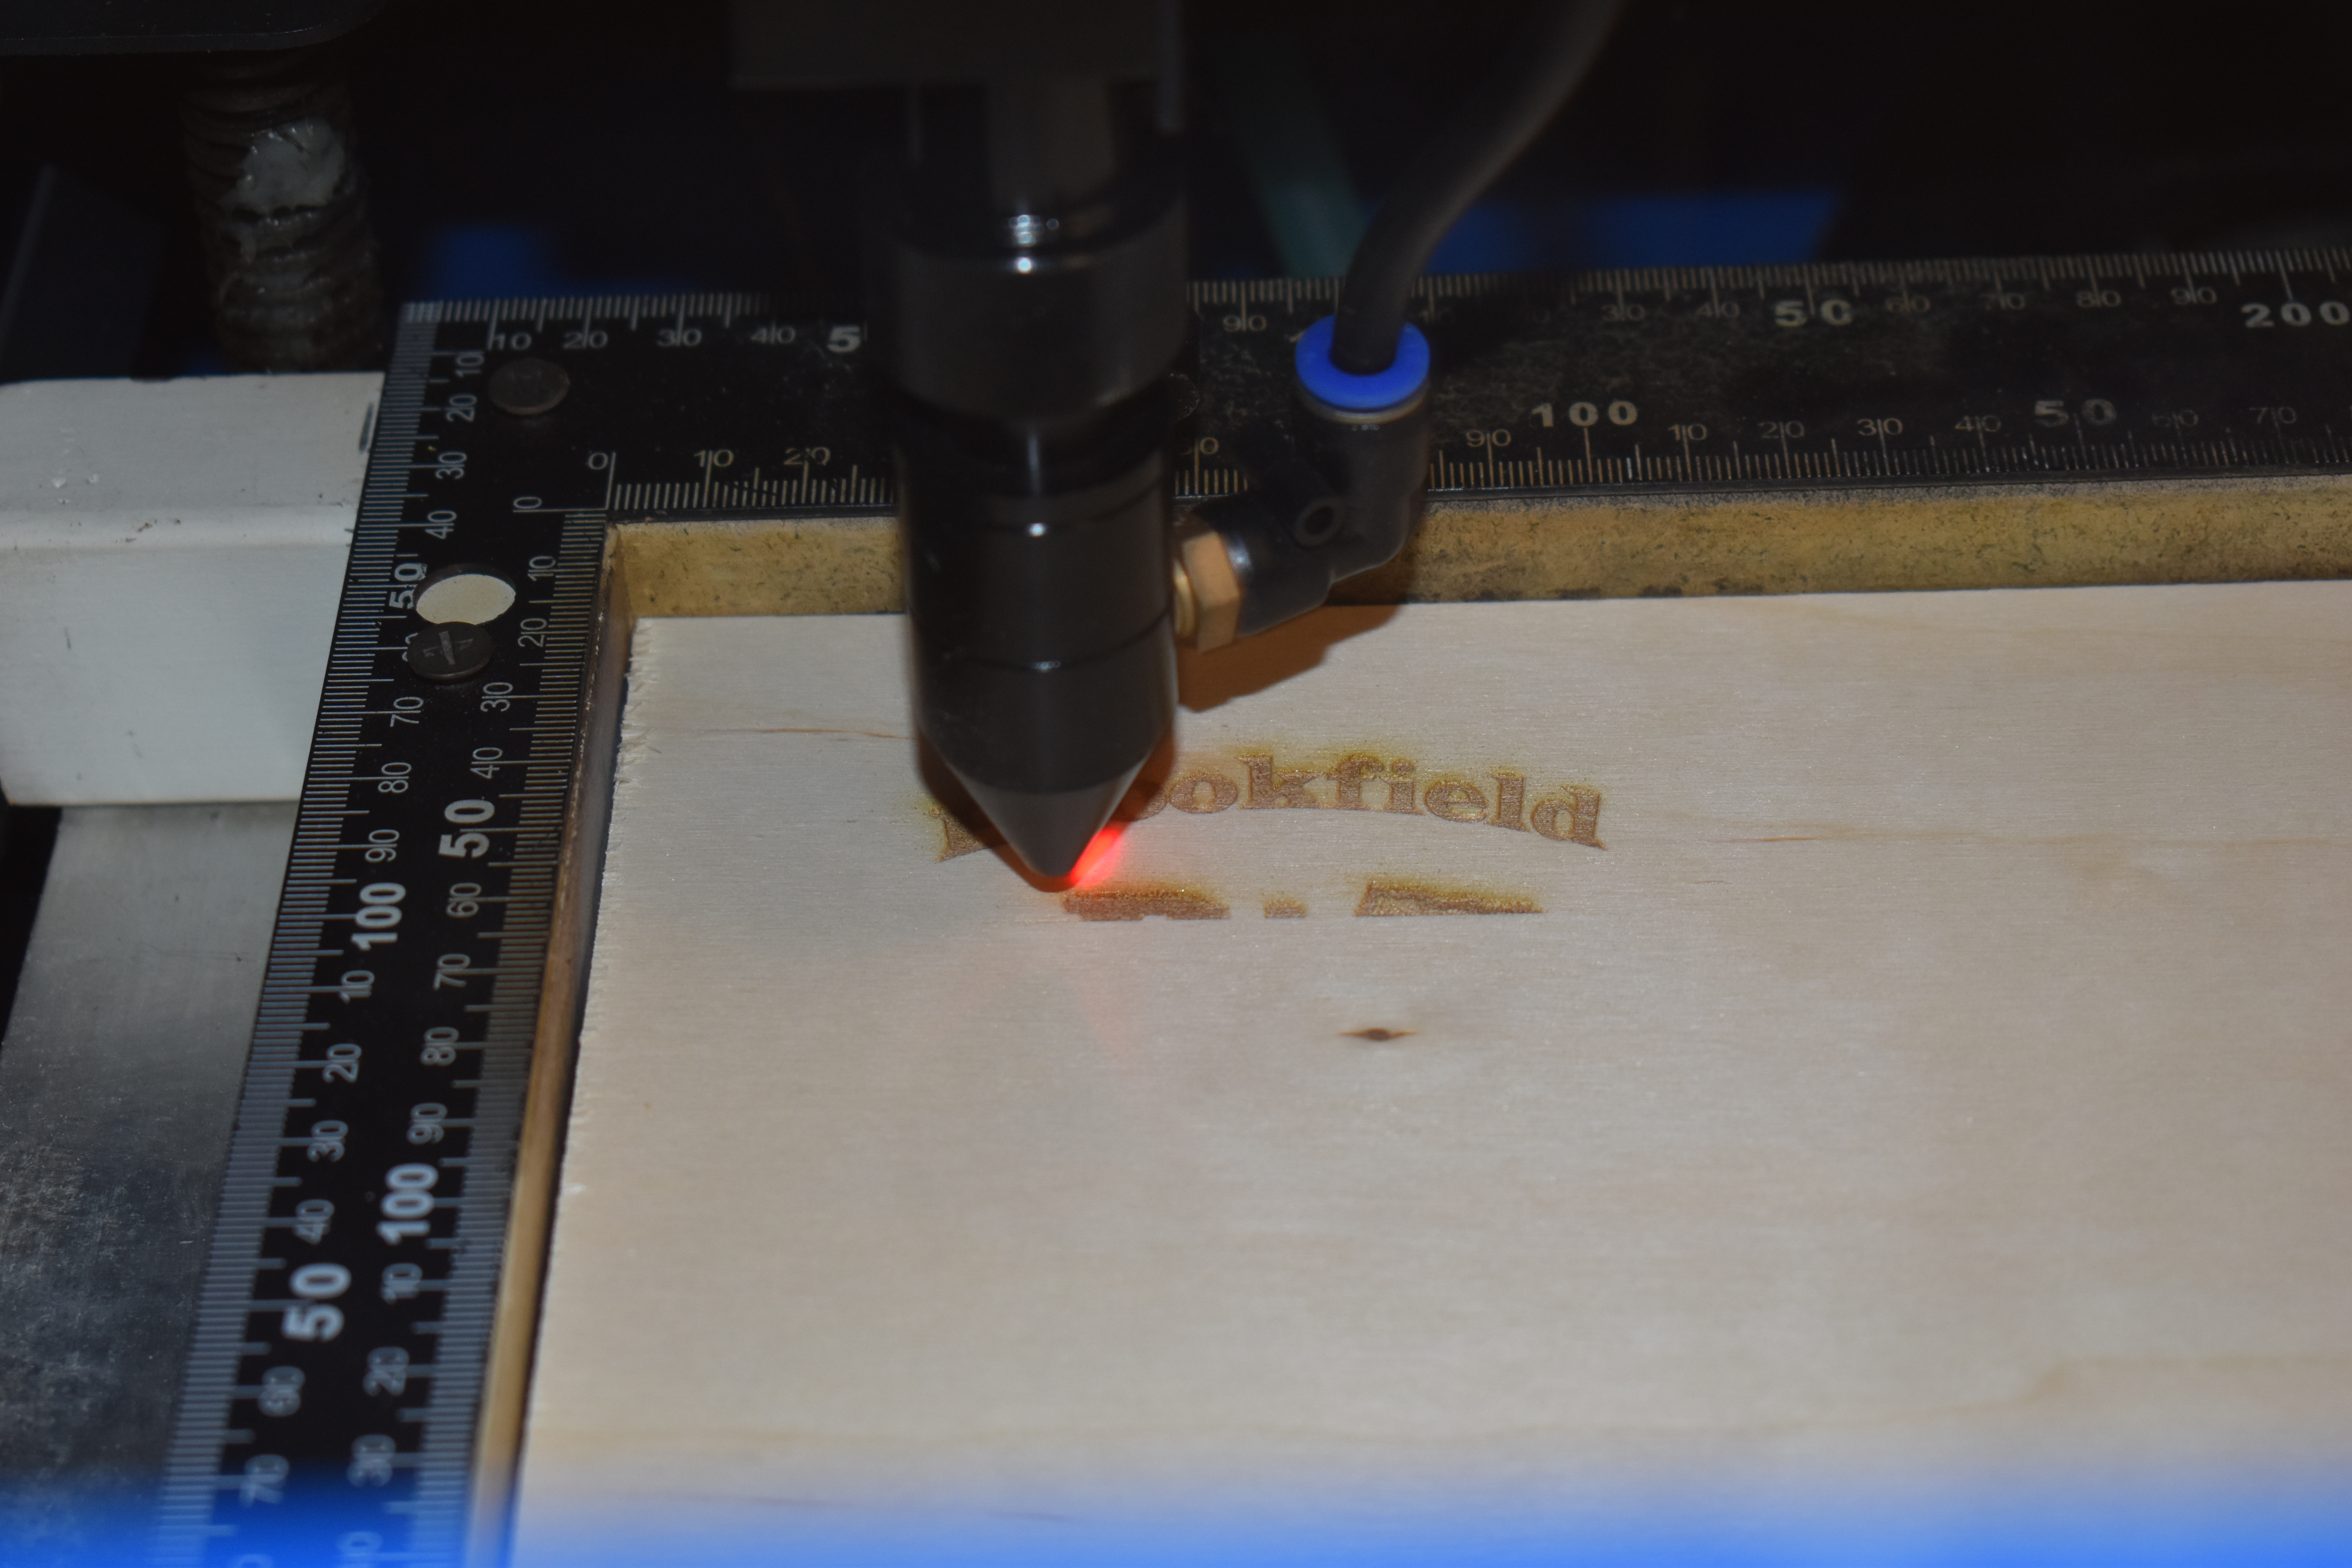 A laser engraver in action.